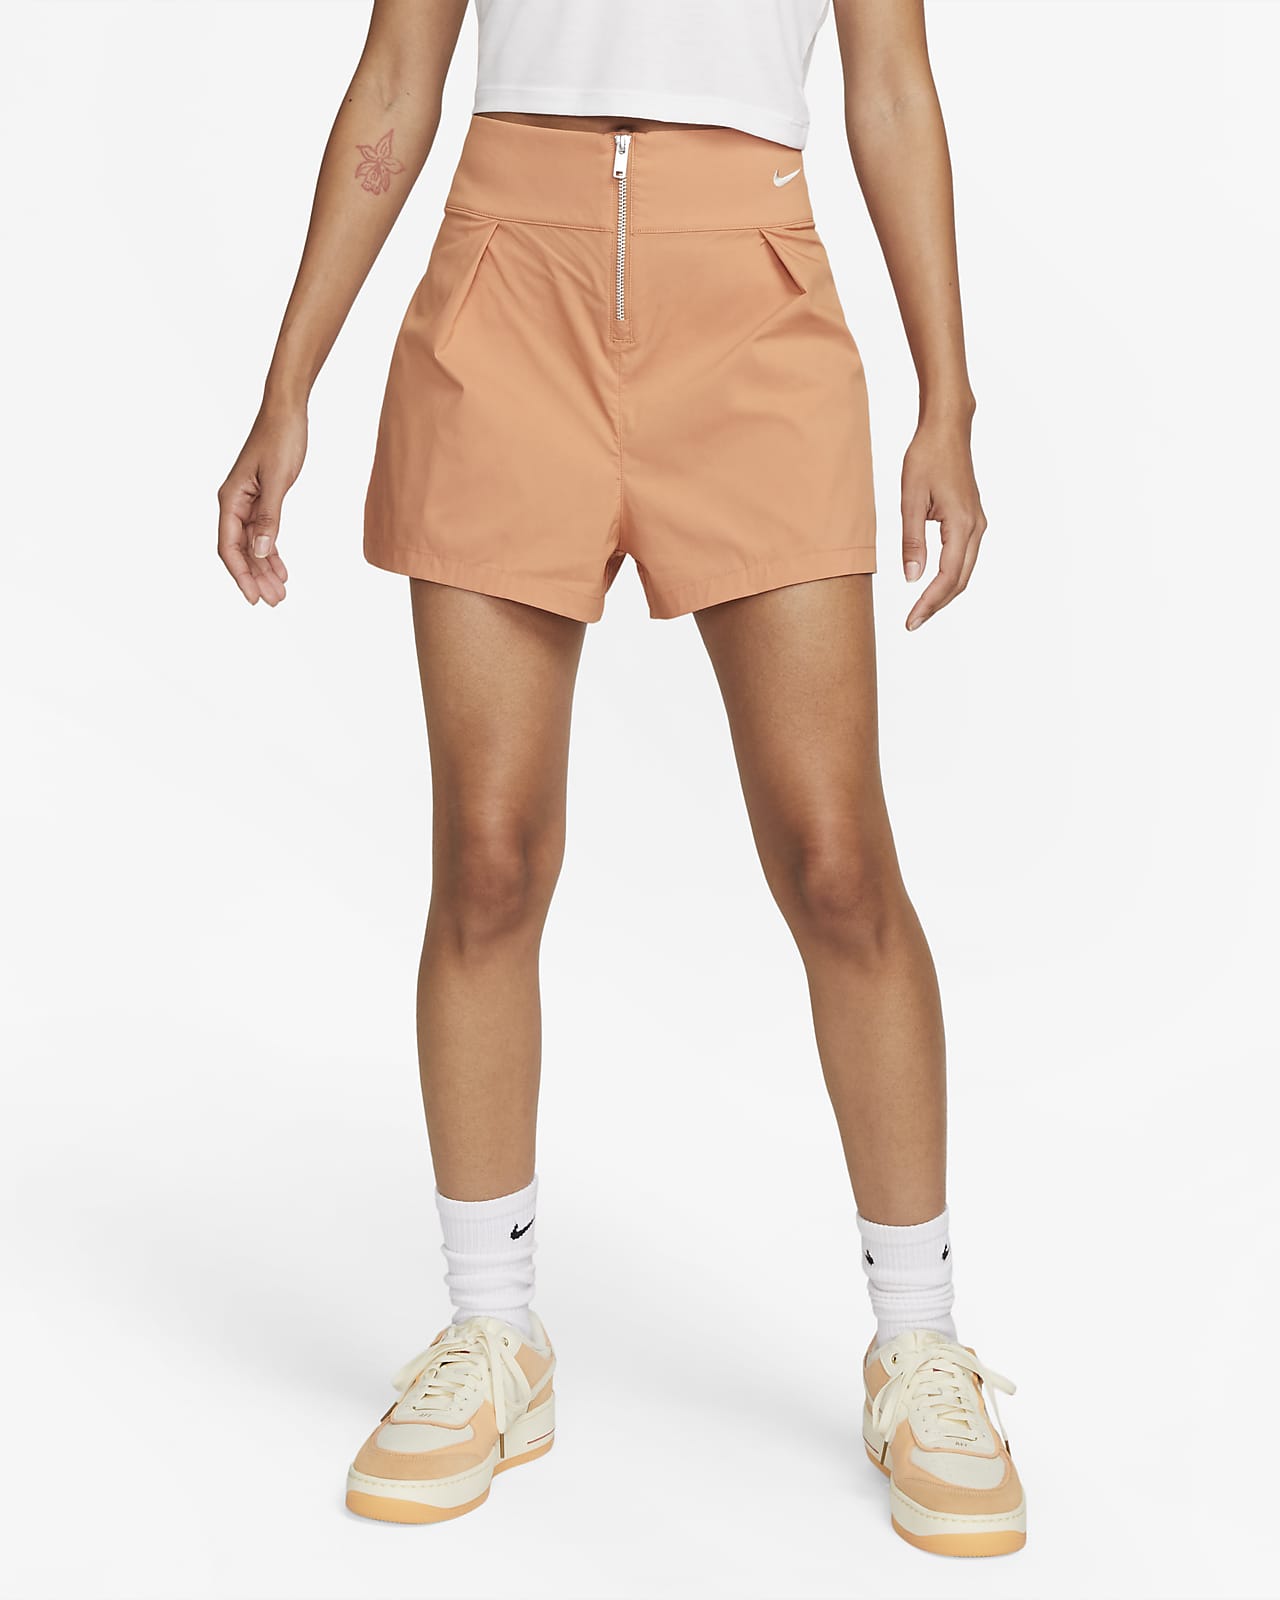 Nike Sportswear Collection Shorts. Trouser Women\'s